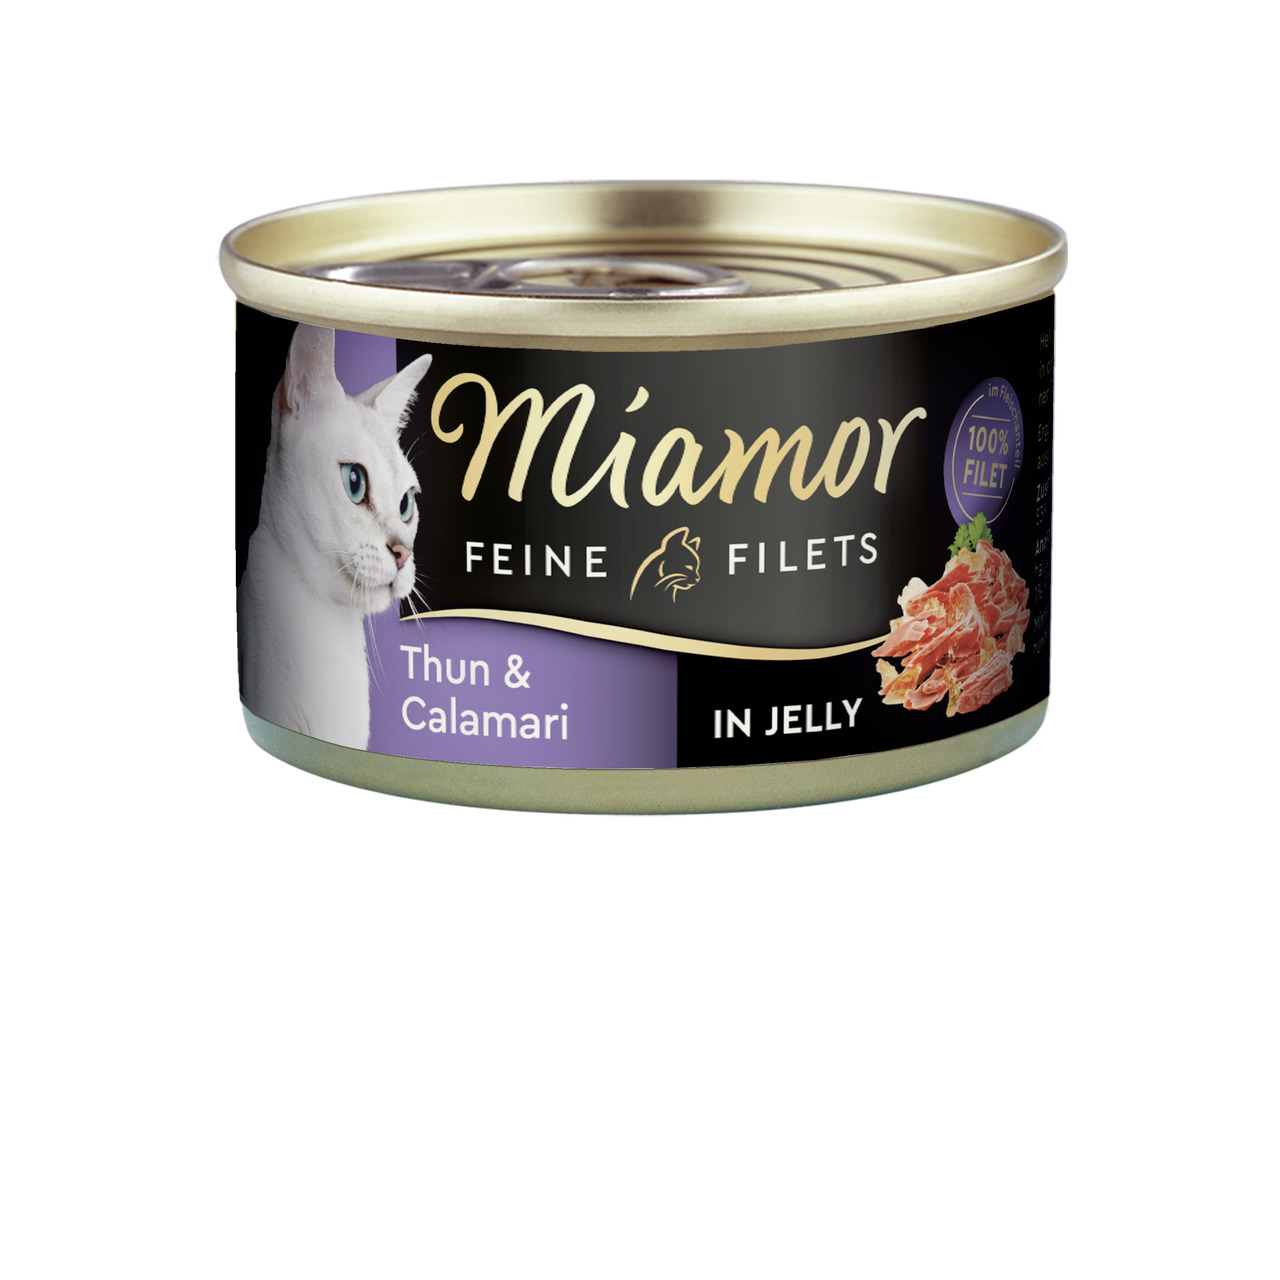 Miamor Feine Filets in Jelly Thun & Calamari Katzen Nassfutter 100 g